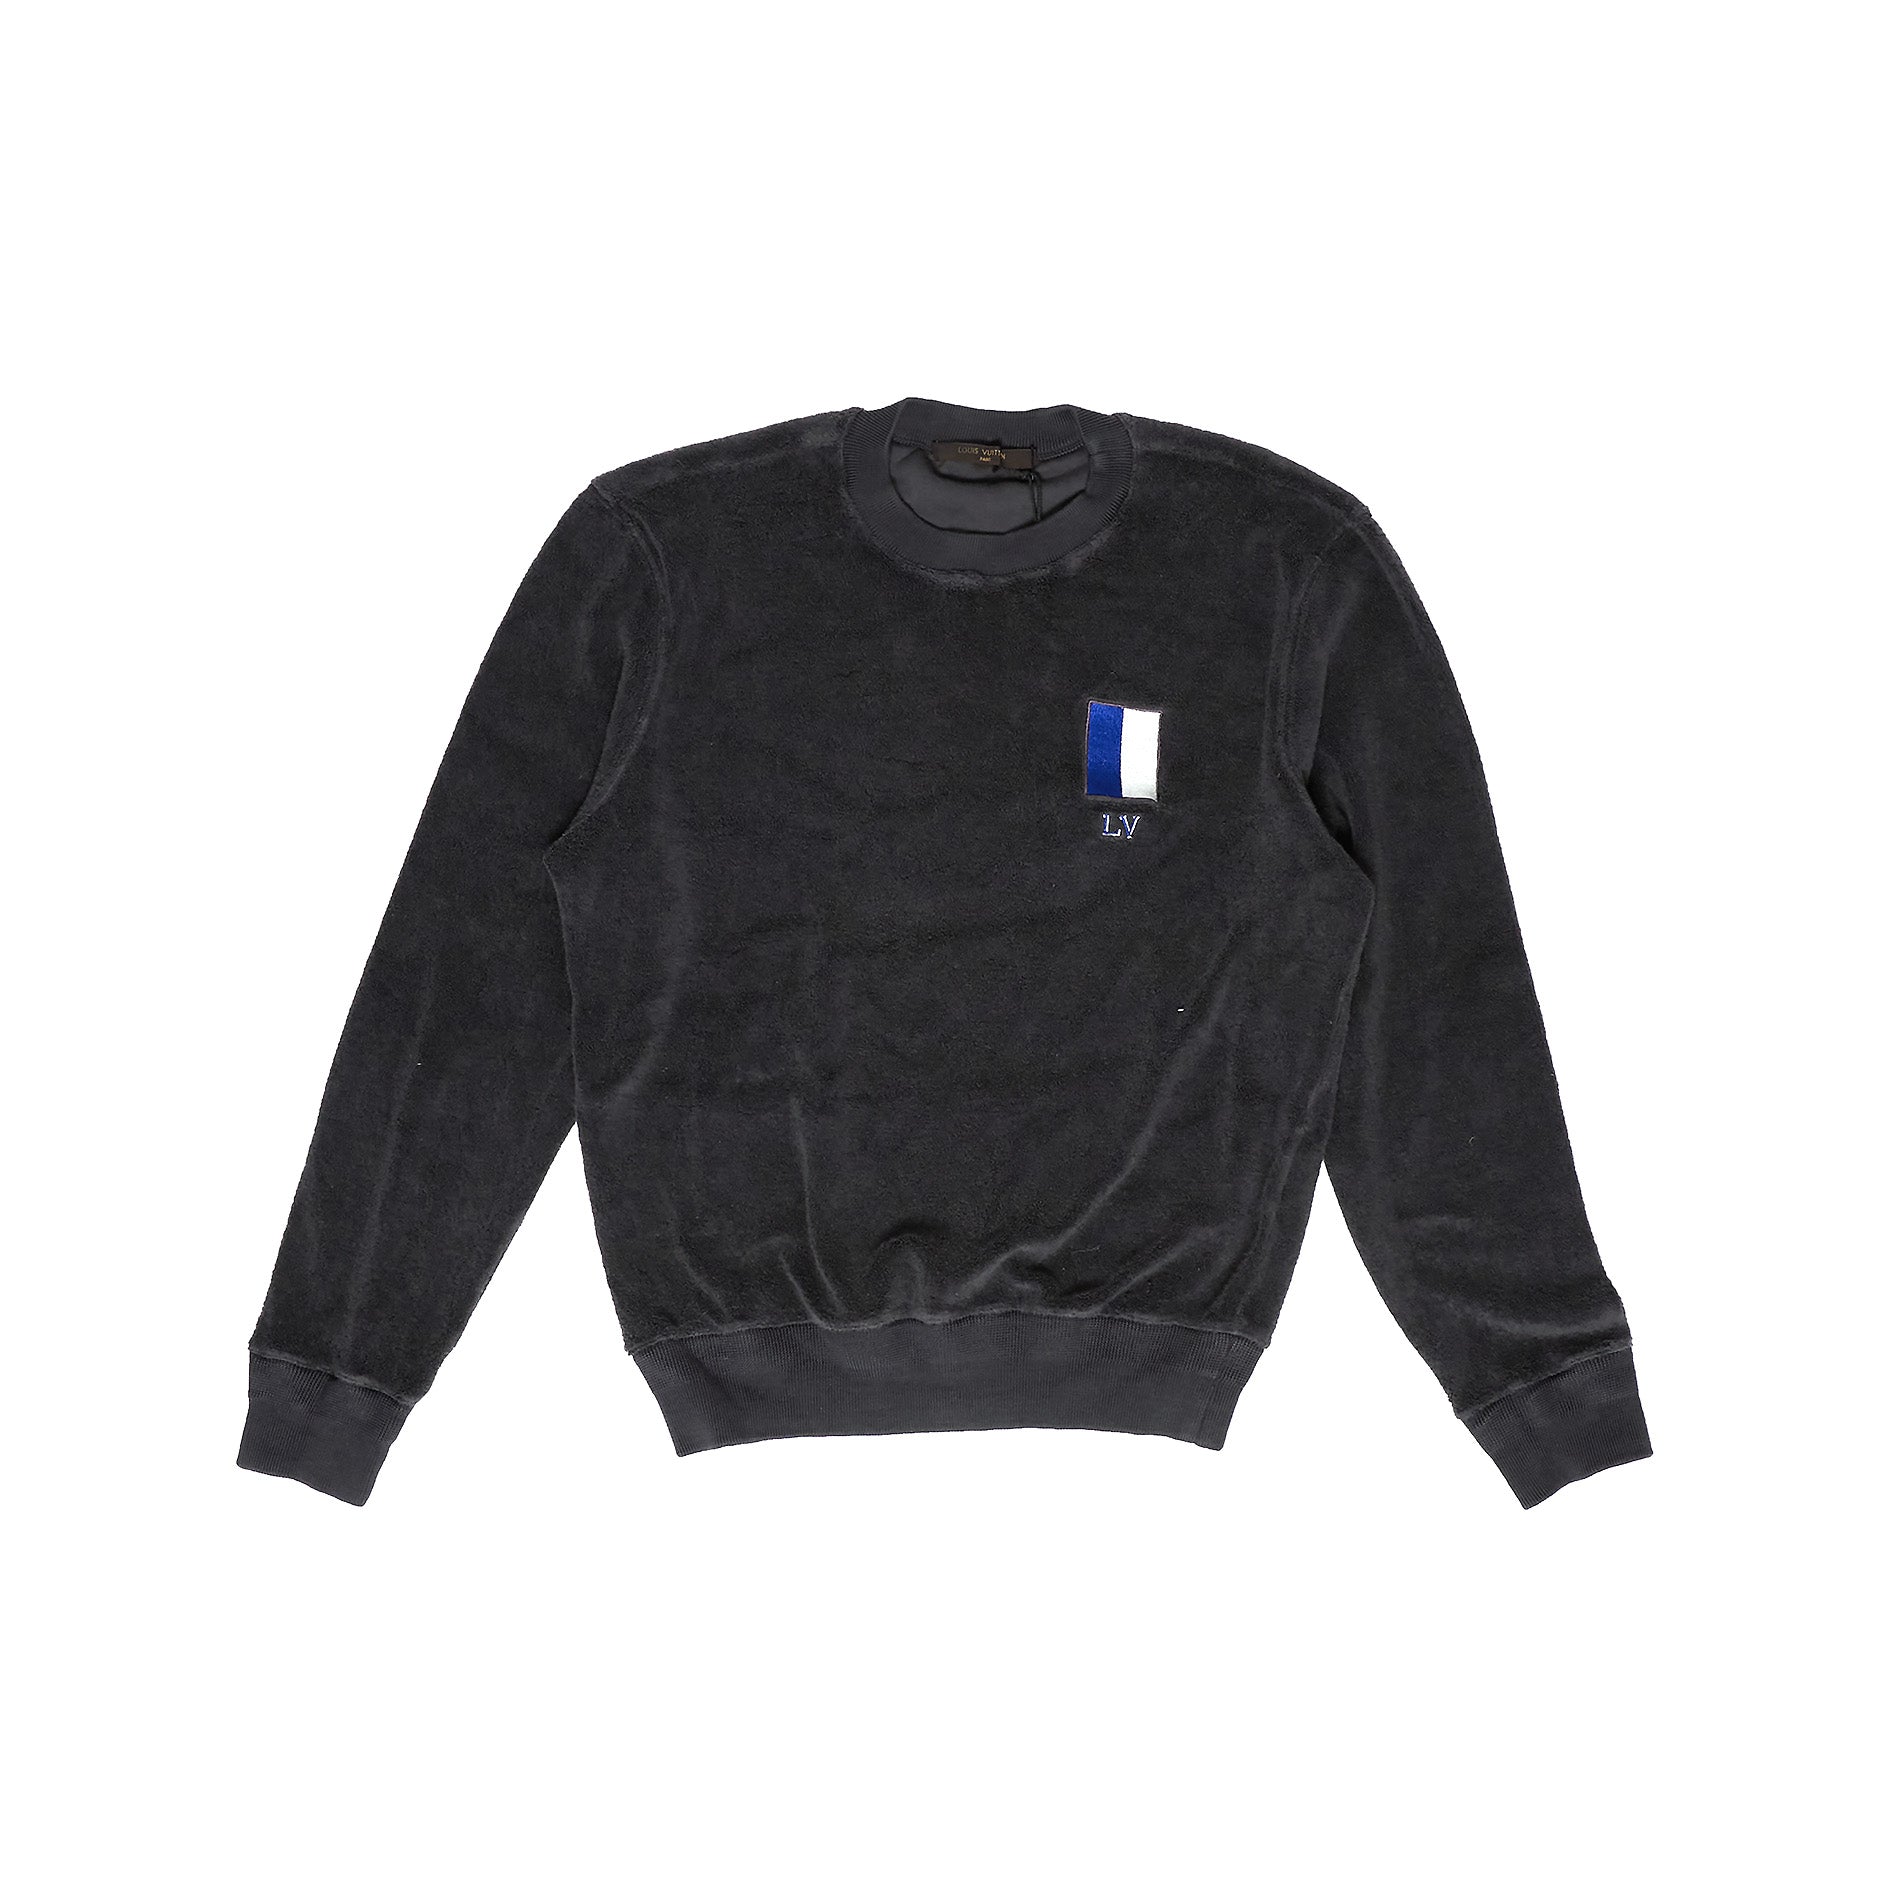 vuitton sweater black